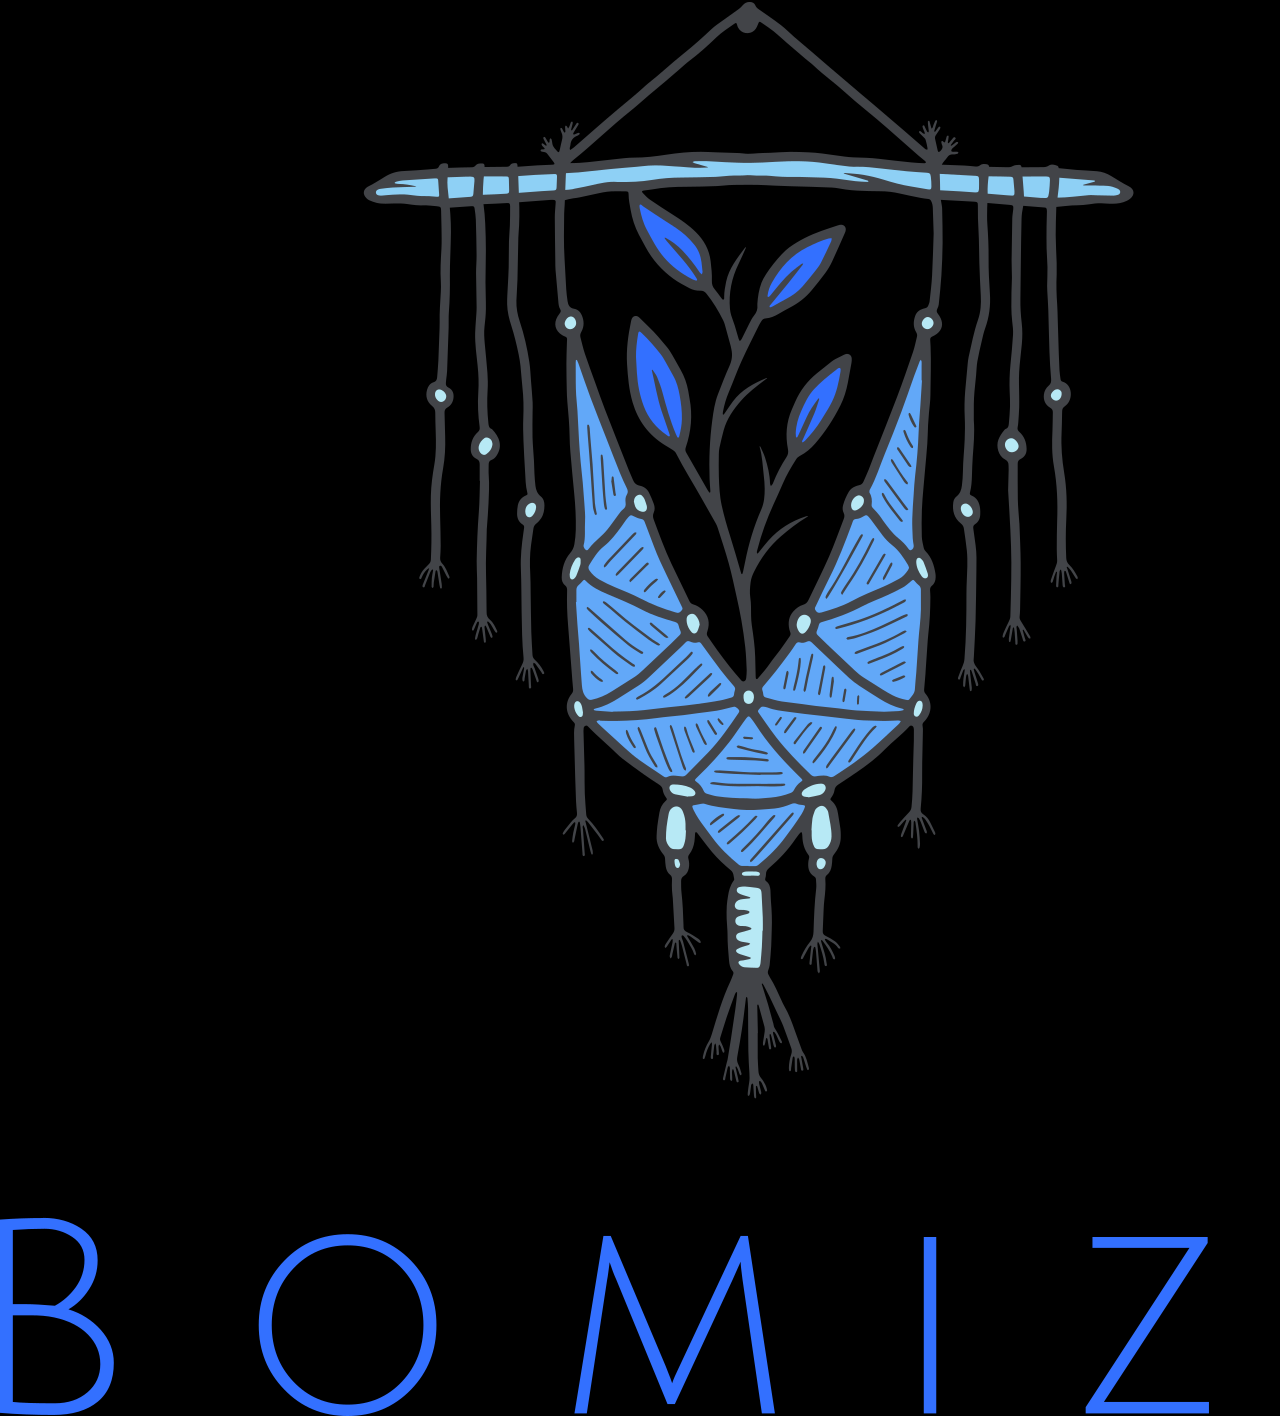 Bomizu's web page